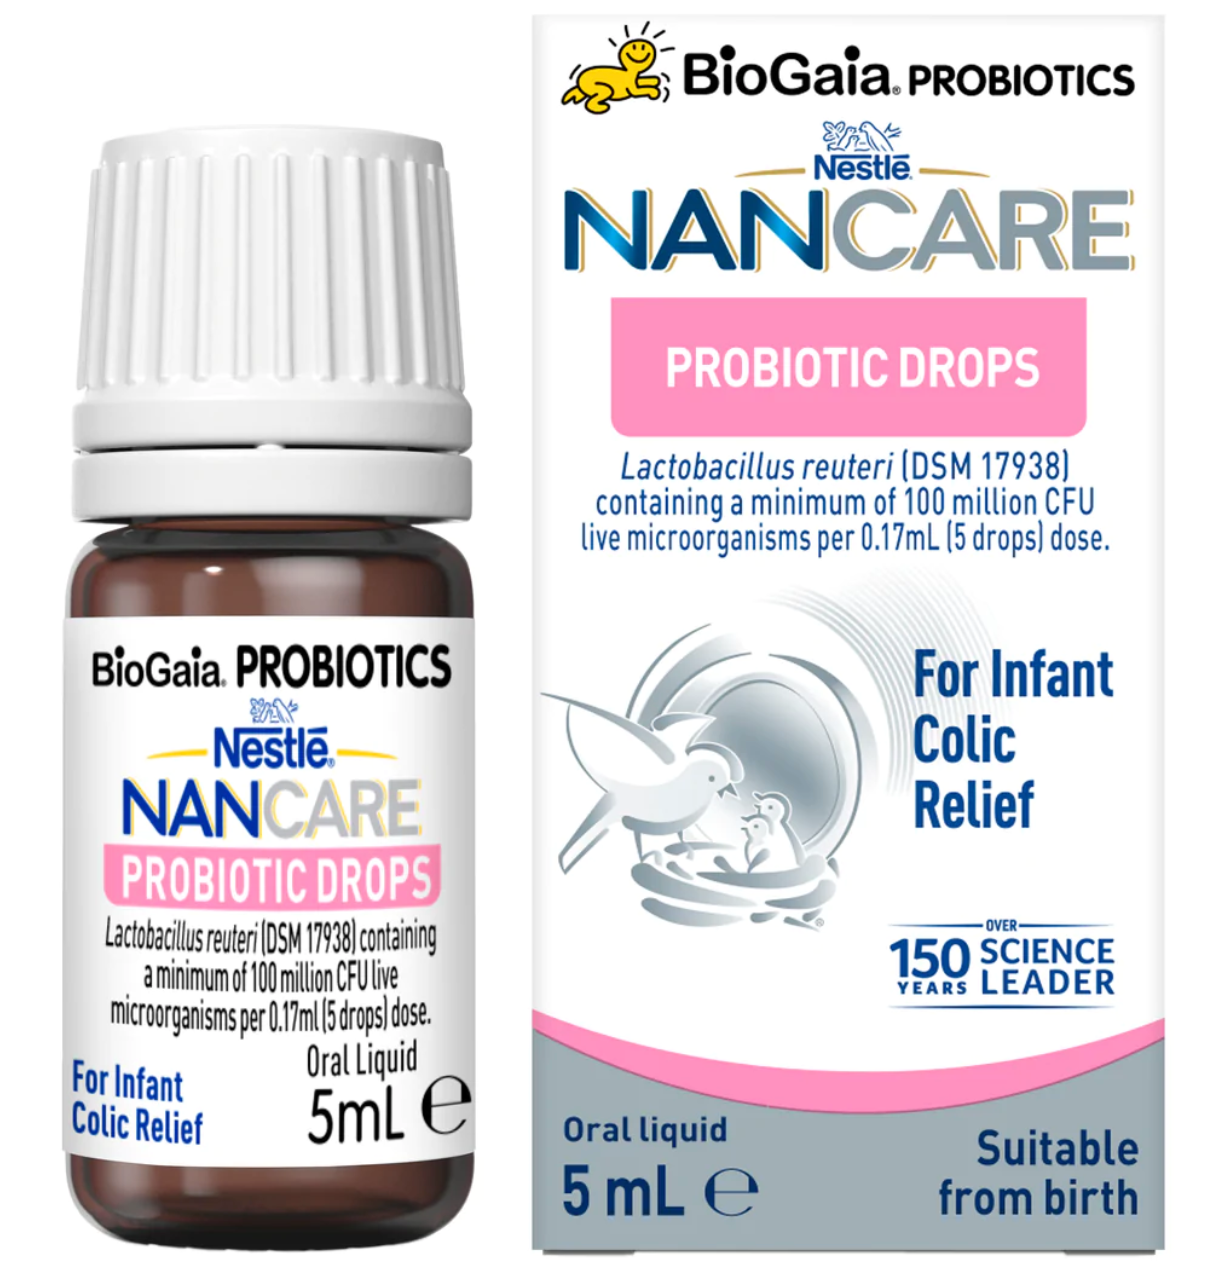 NANCARE Probiotic Drops 5mL